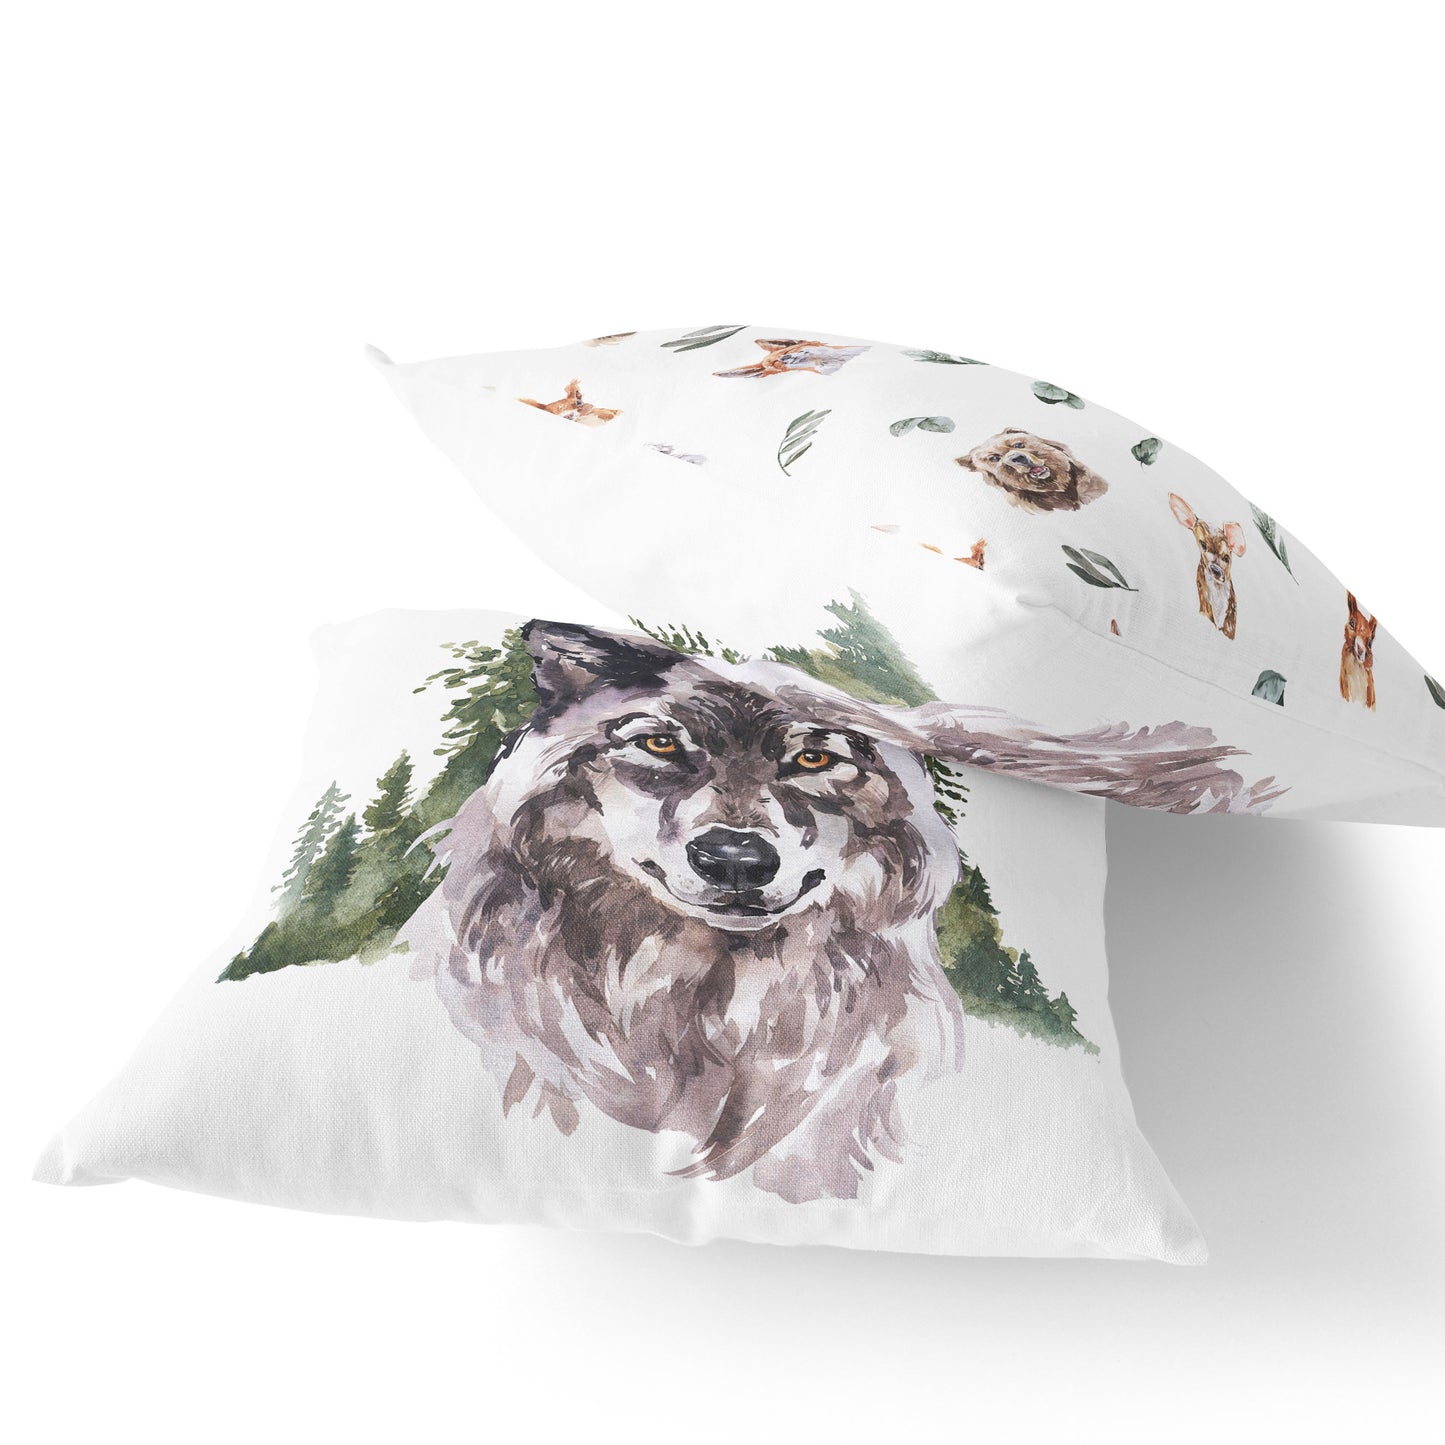 Wolf Pillow cover, Woodland Nursery Decor - Wild Woodland